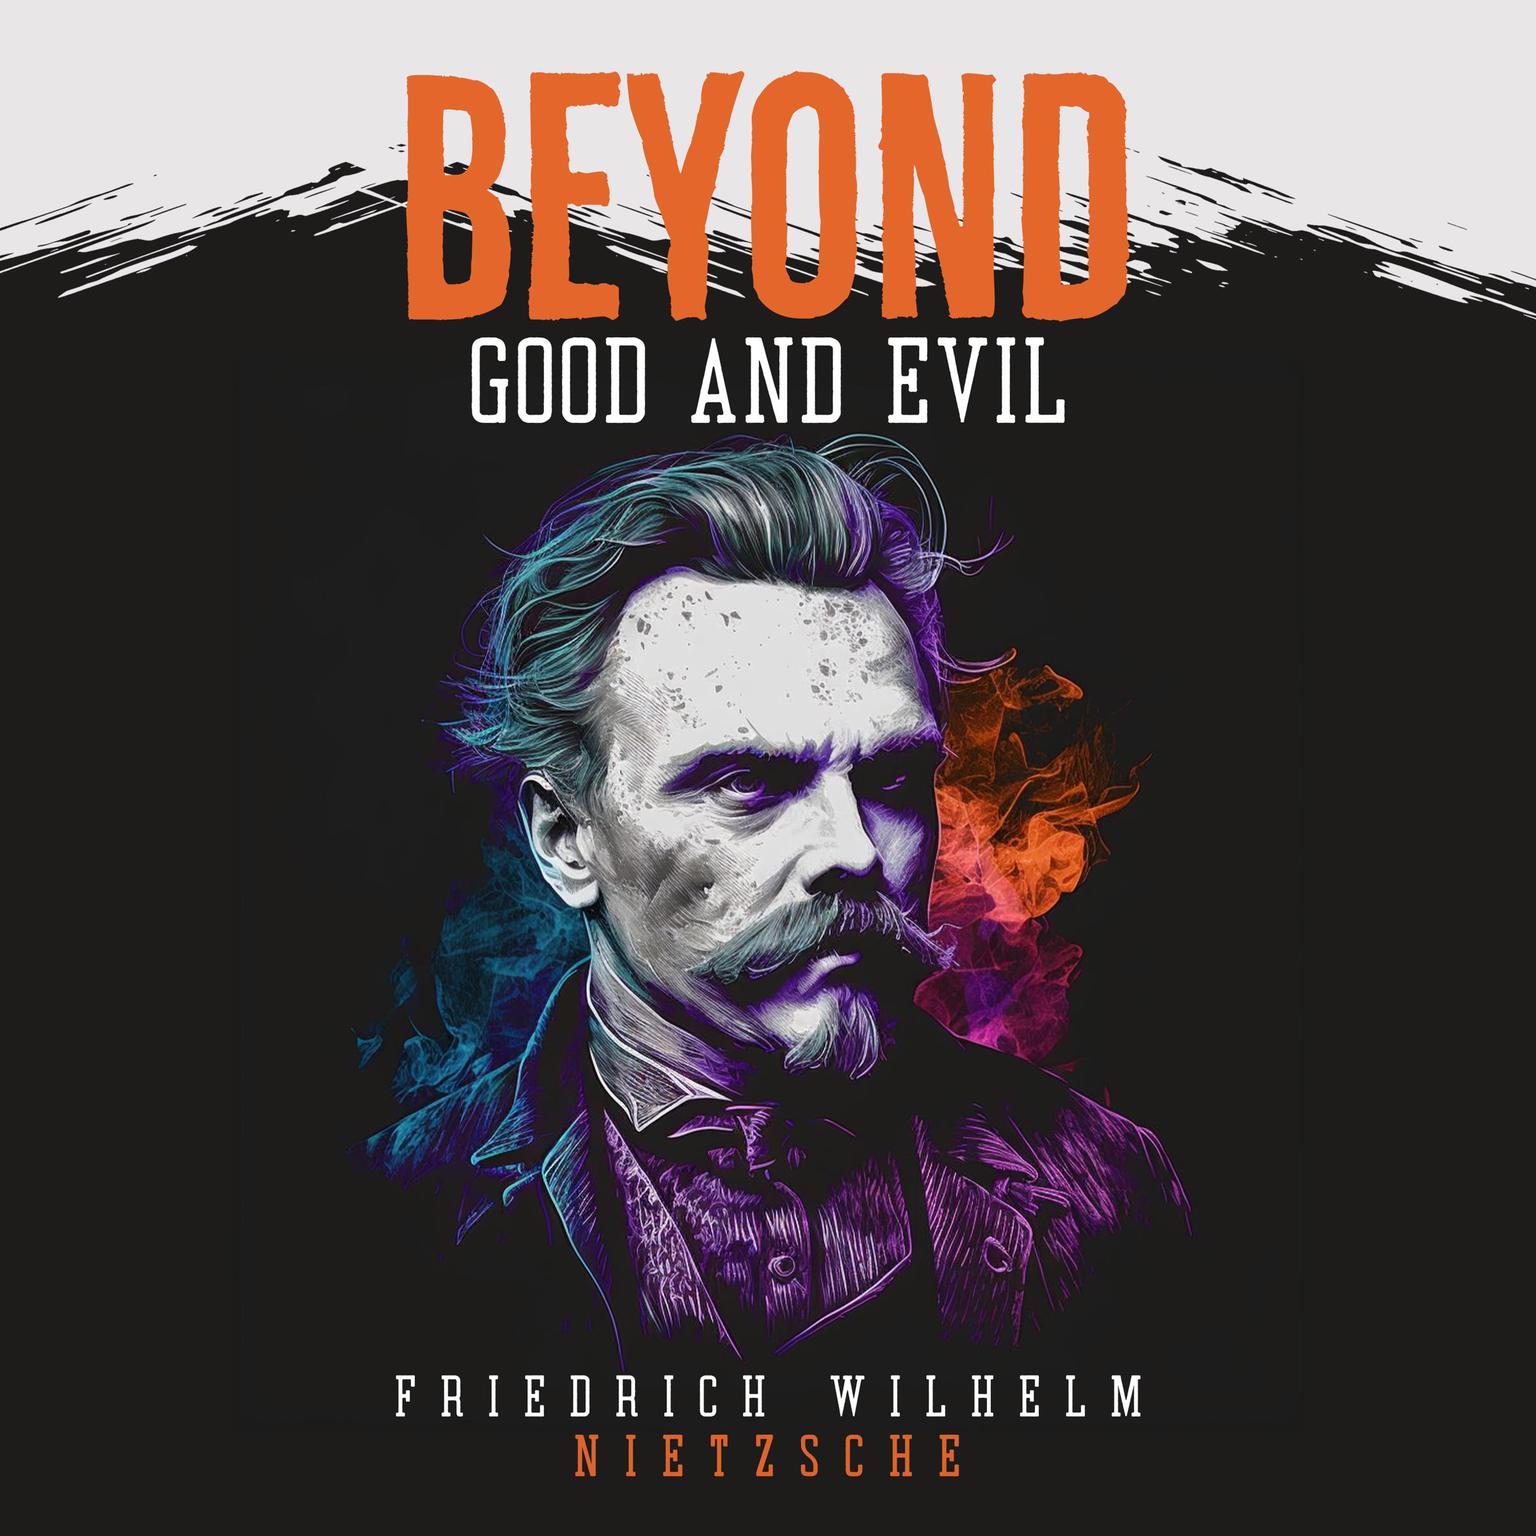 Beyond Good and Evil Audiobook, by Friedrich Wilhelm Nietzsche